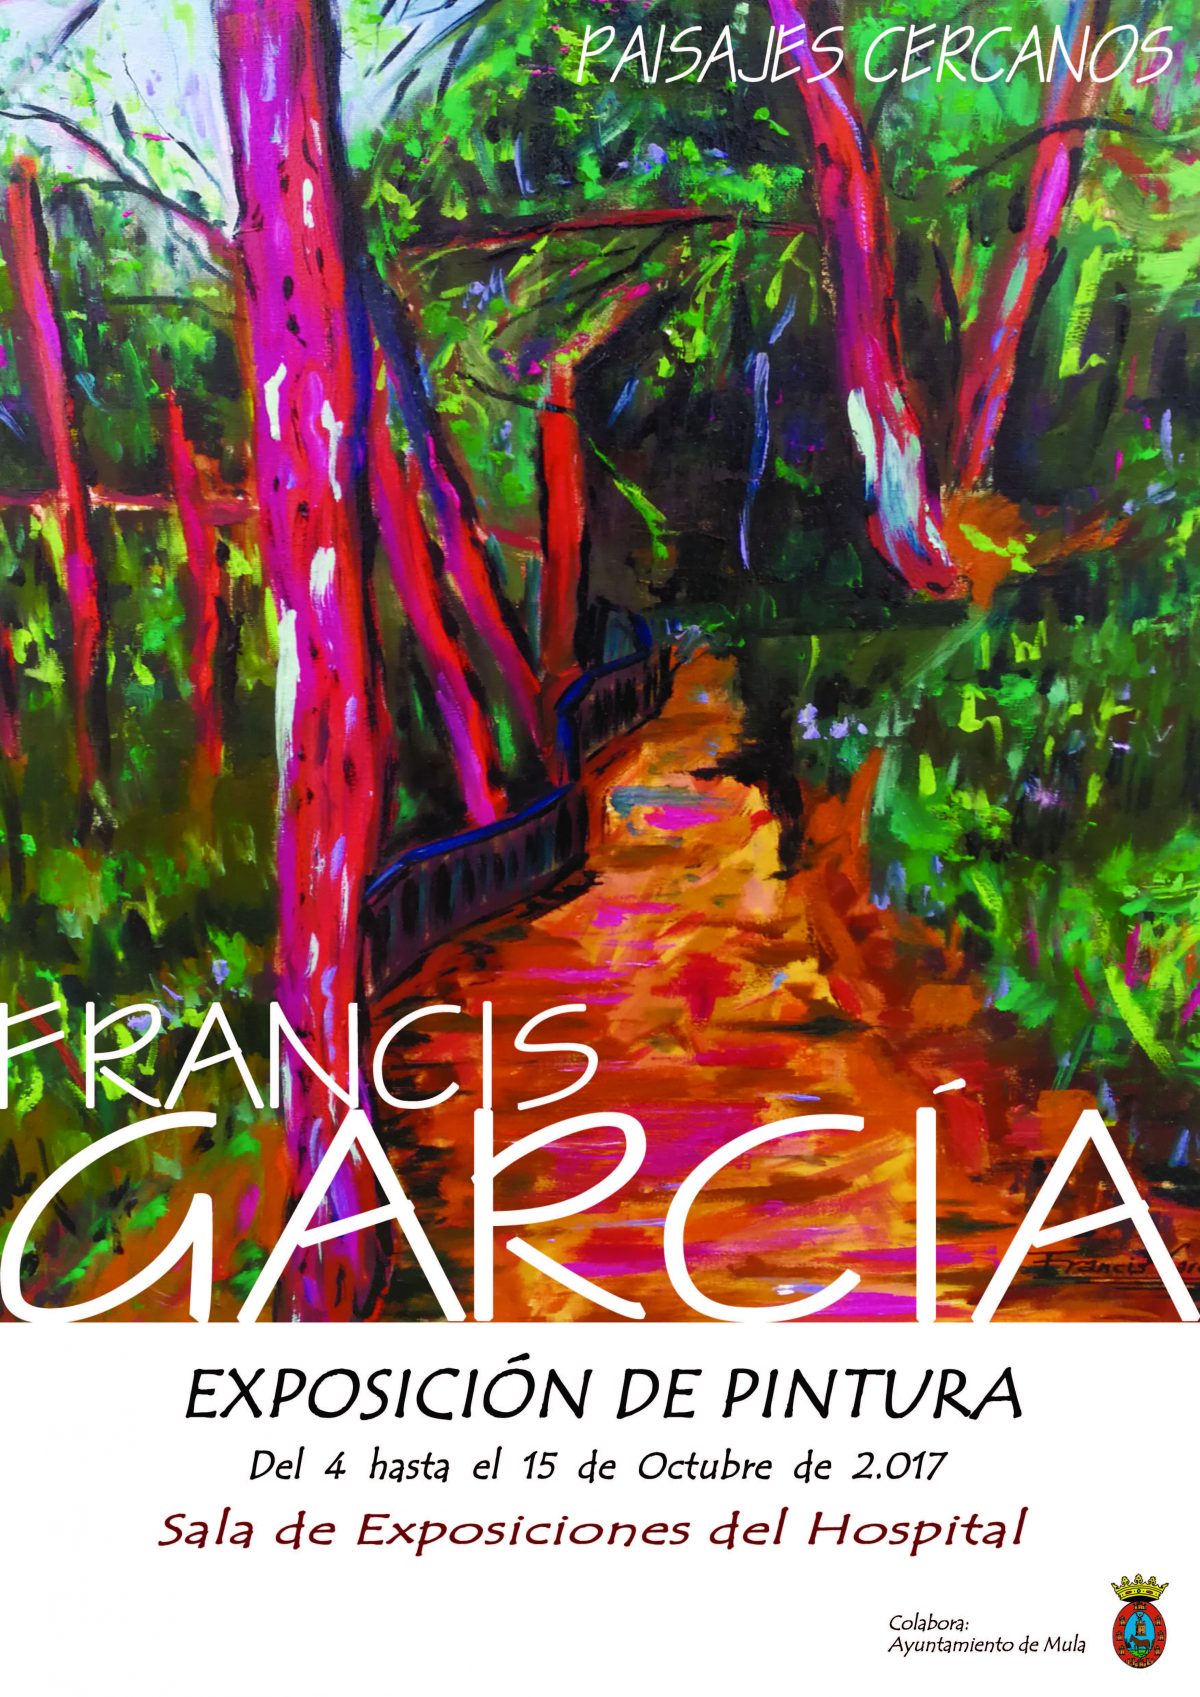 Exposición Paisajes cercanos por Francis García en Mula